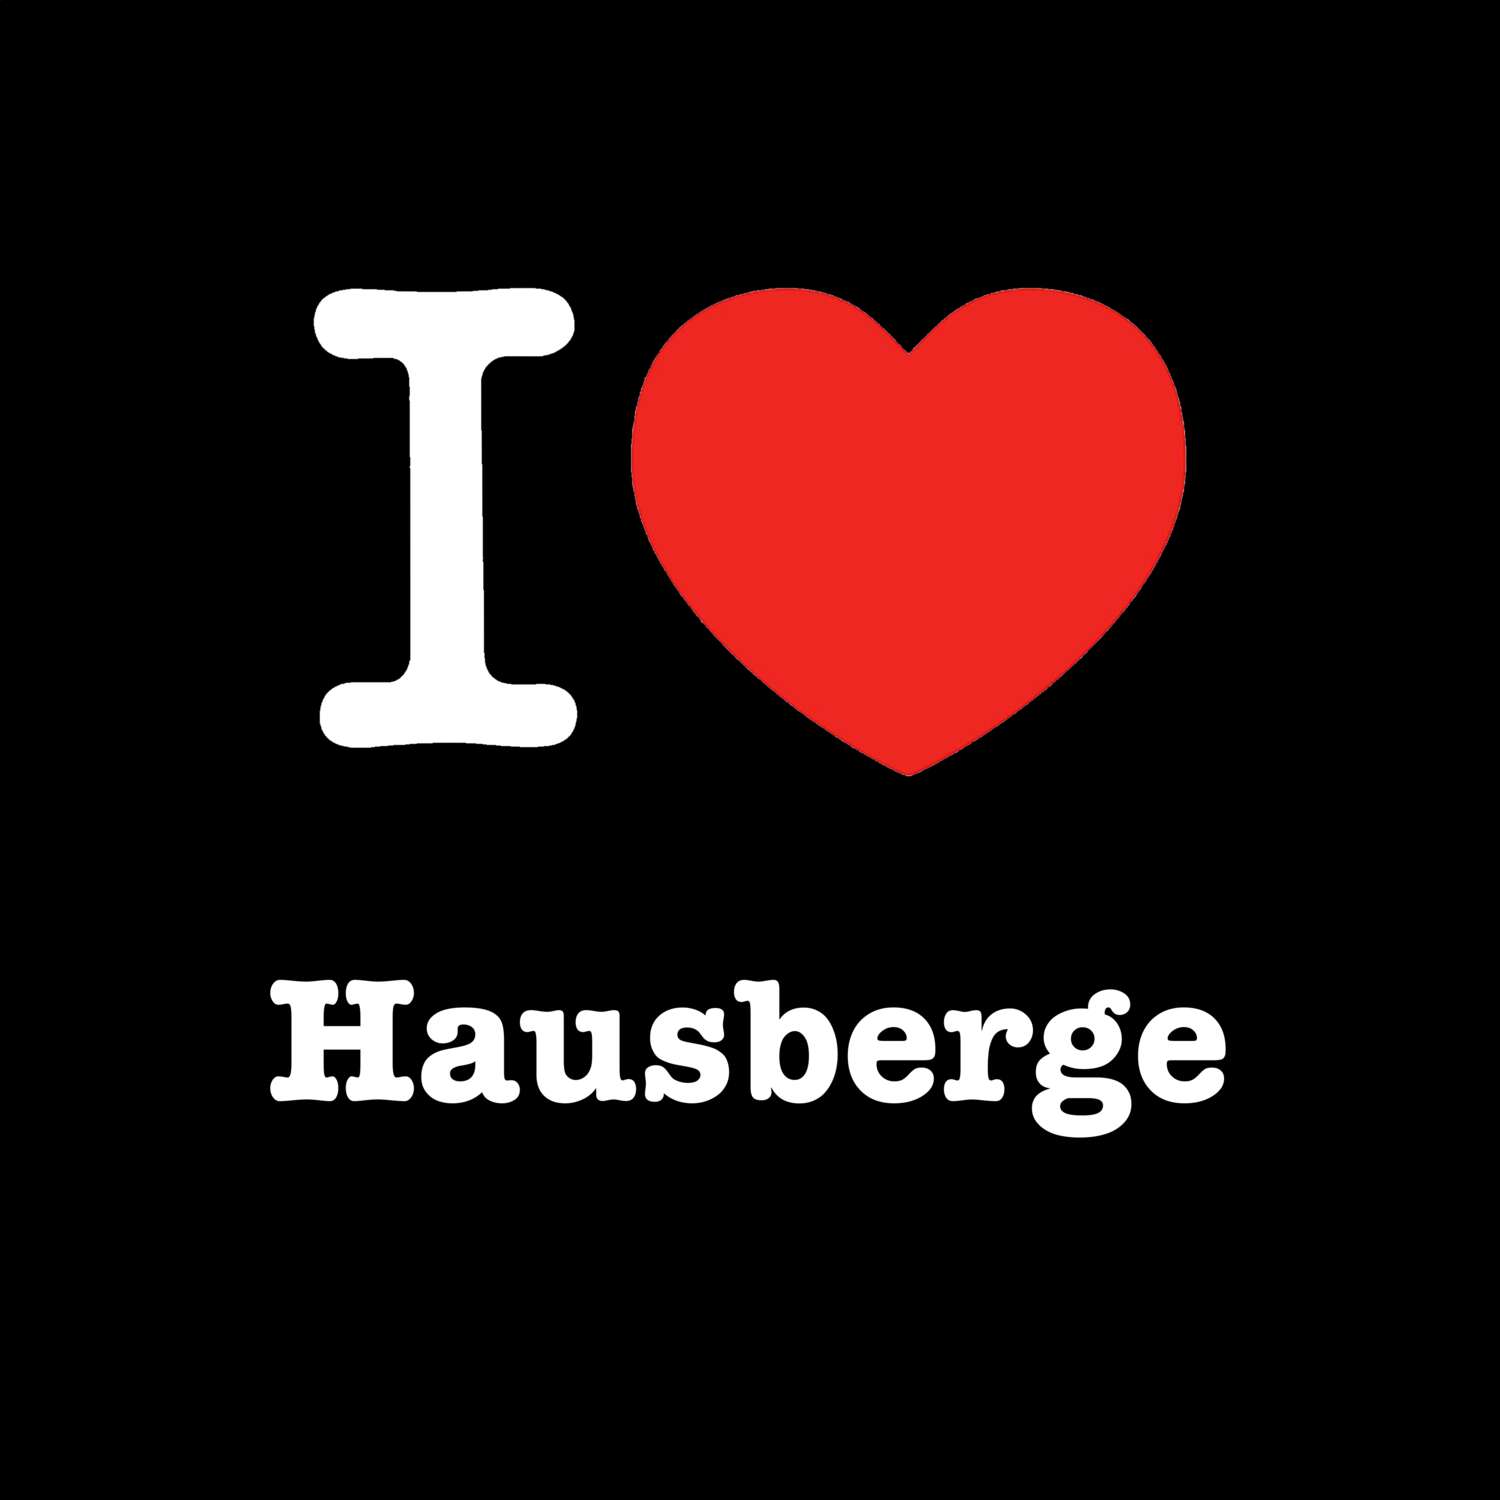 Hausberge T-Shirt »I love«